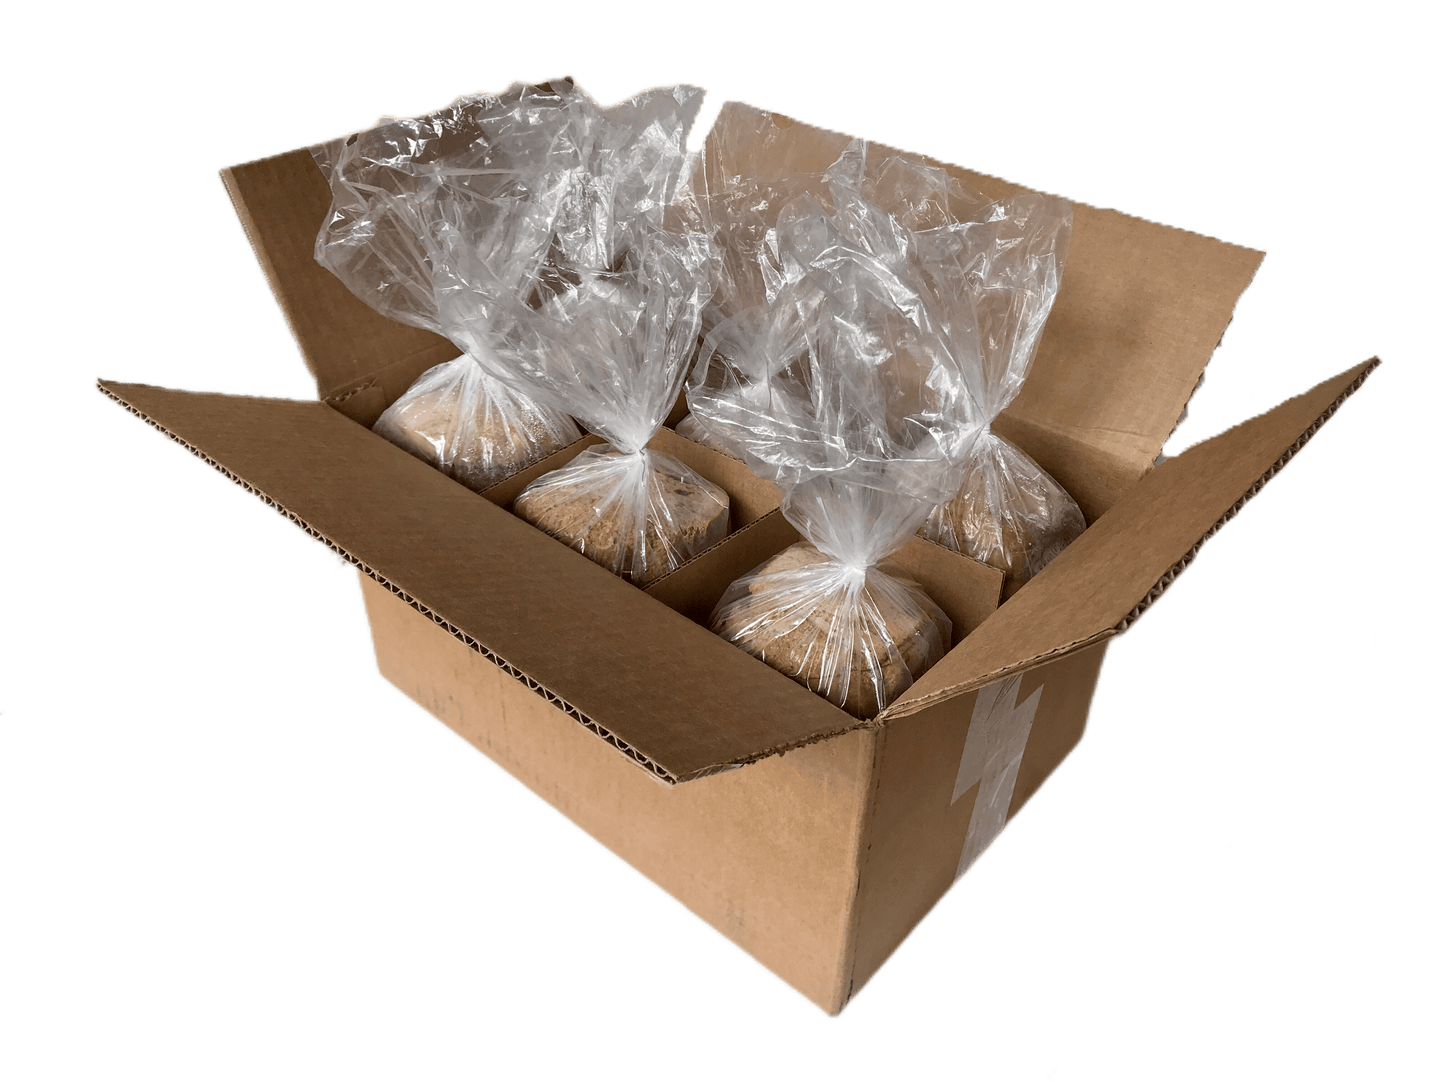 Long Slice Food Service Bread CASE (6 items)